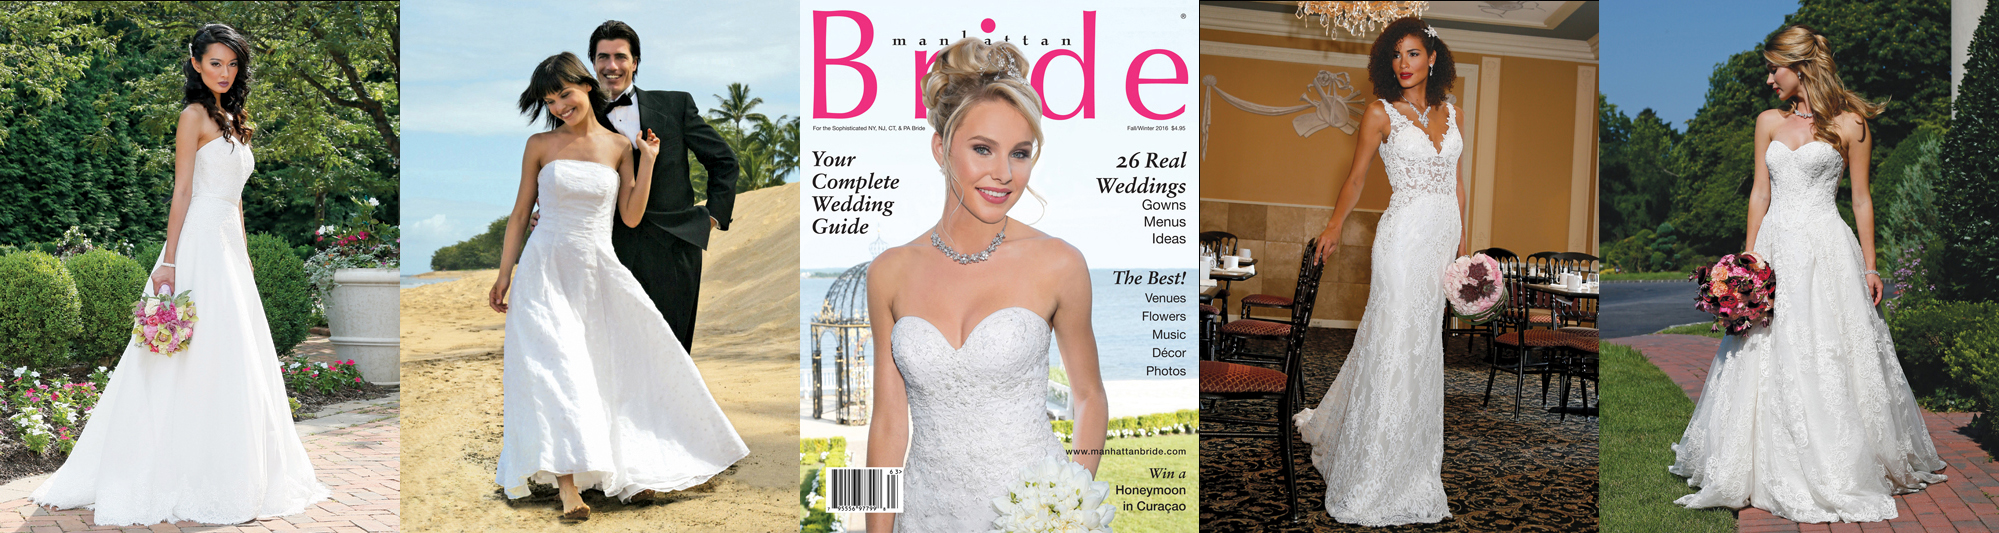 Manhattan Bride Covers & More F/W 16